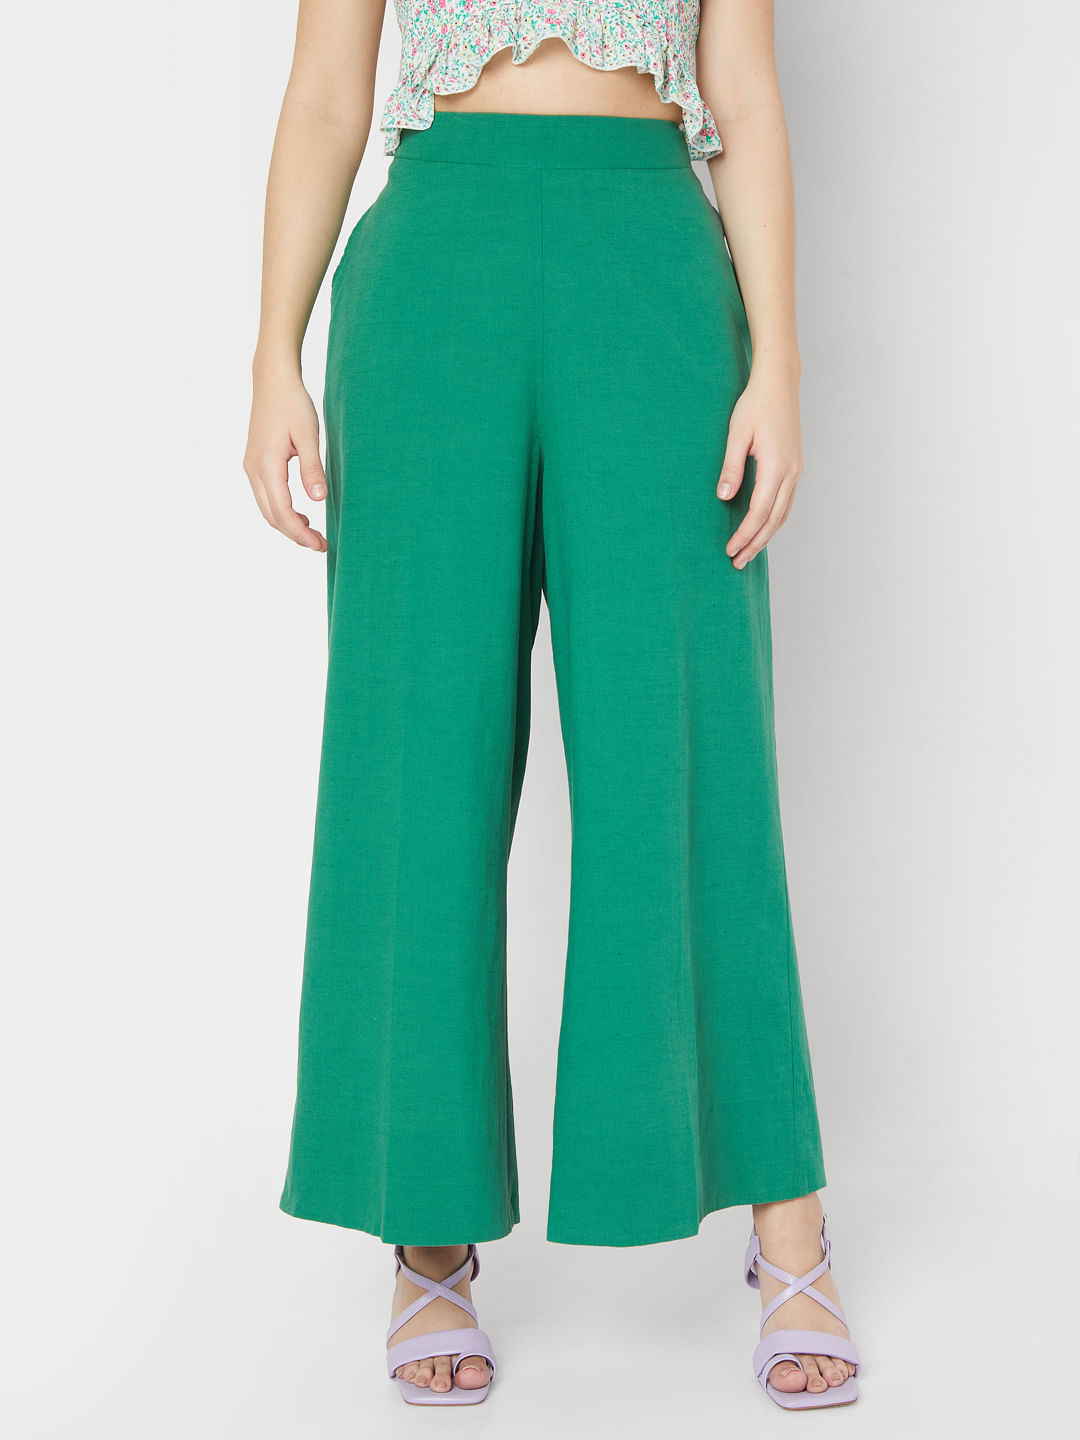 Buy INDYA Green Foil Print Polyester Womens Regular Length Palazzo Pants   Shoppers Stop